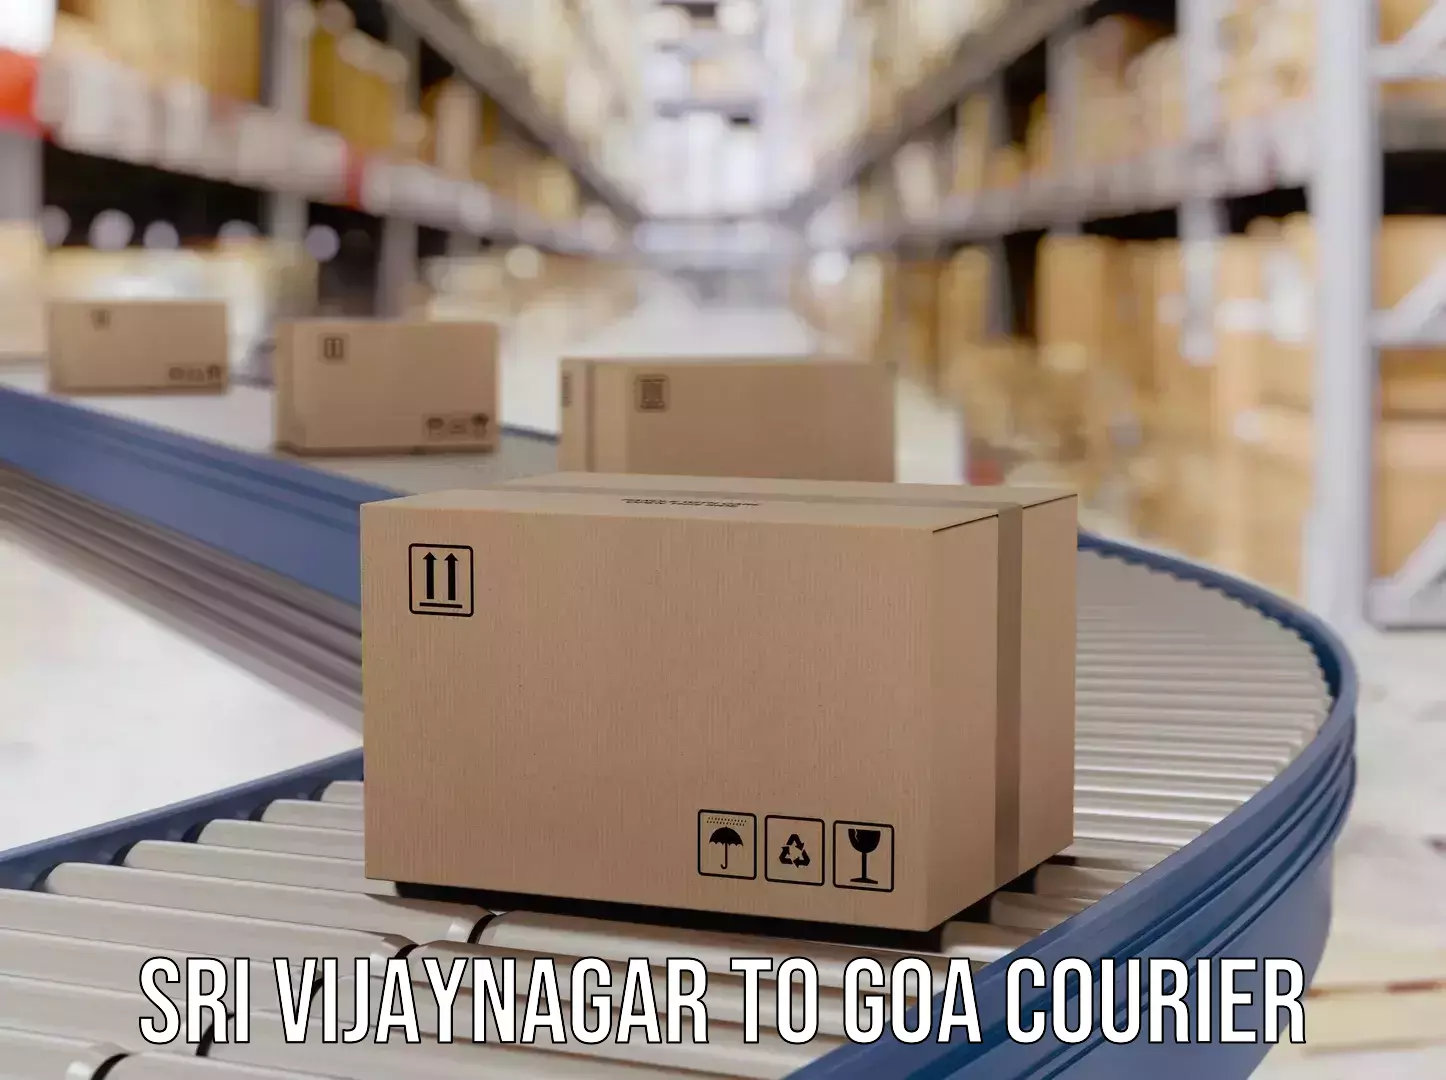 Online package tracking Sri Vijaynagar to Goa